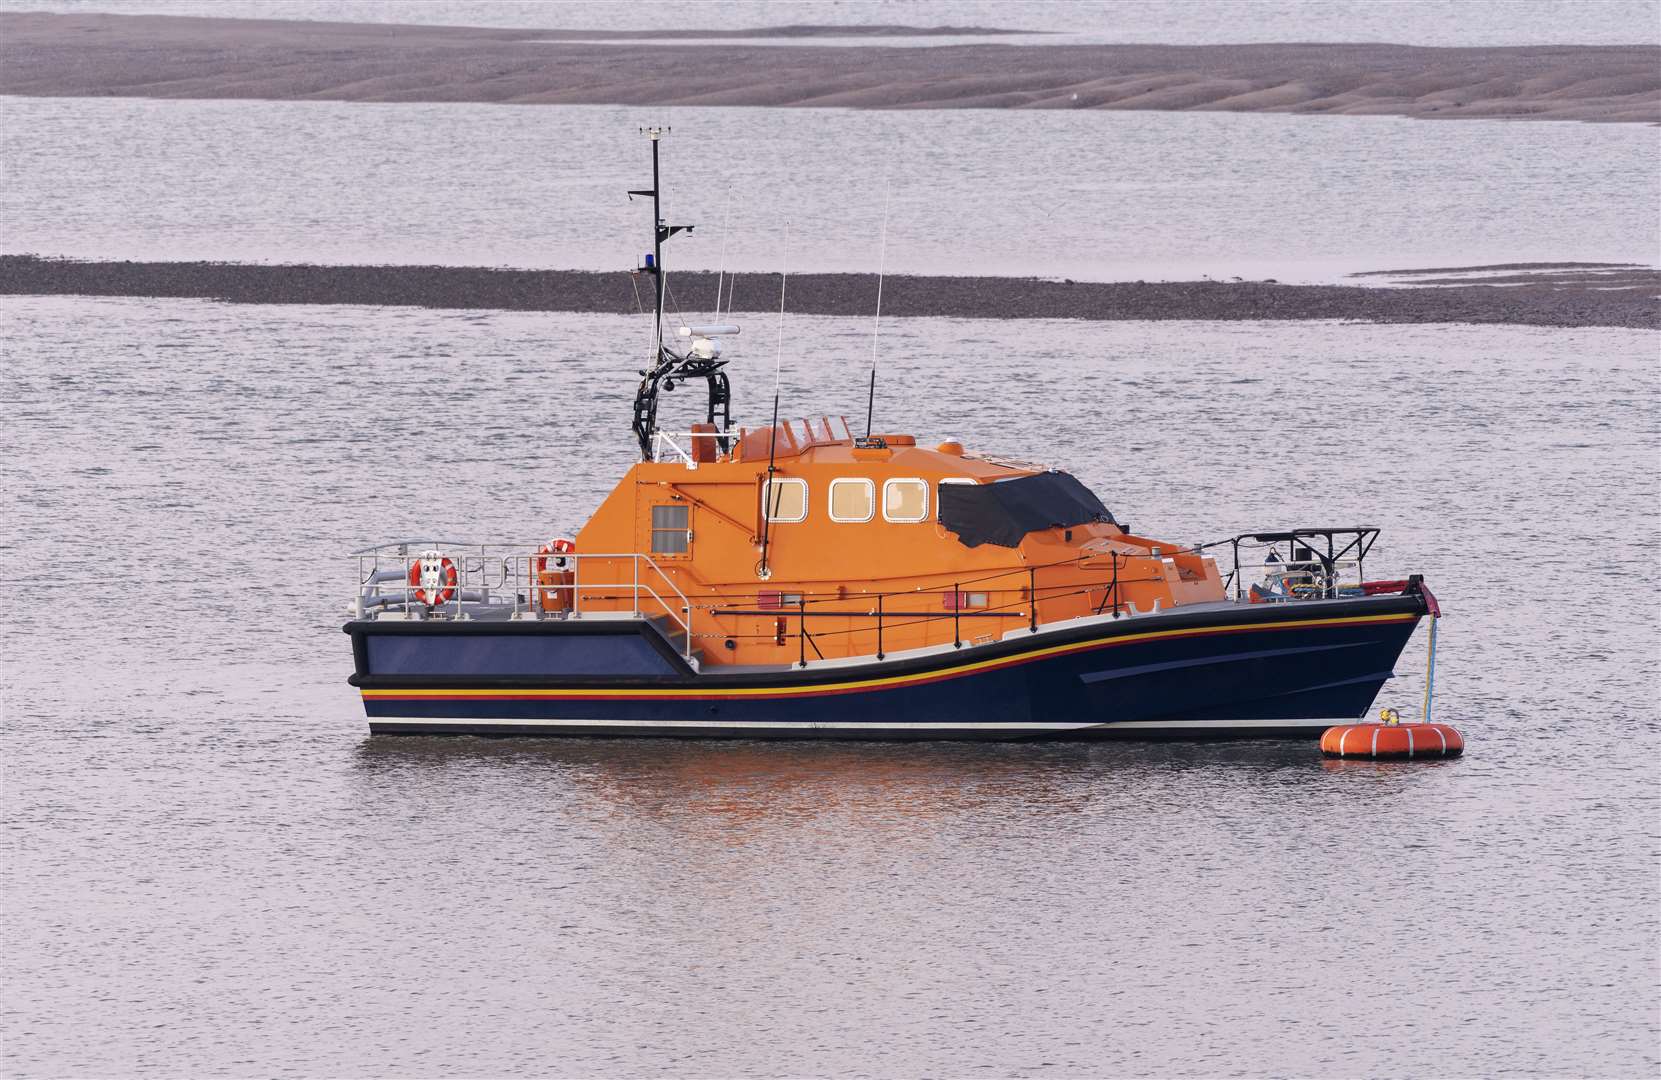 The coastguard co-ordinated the rescue effort.